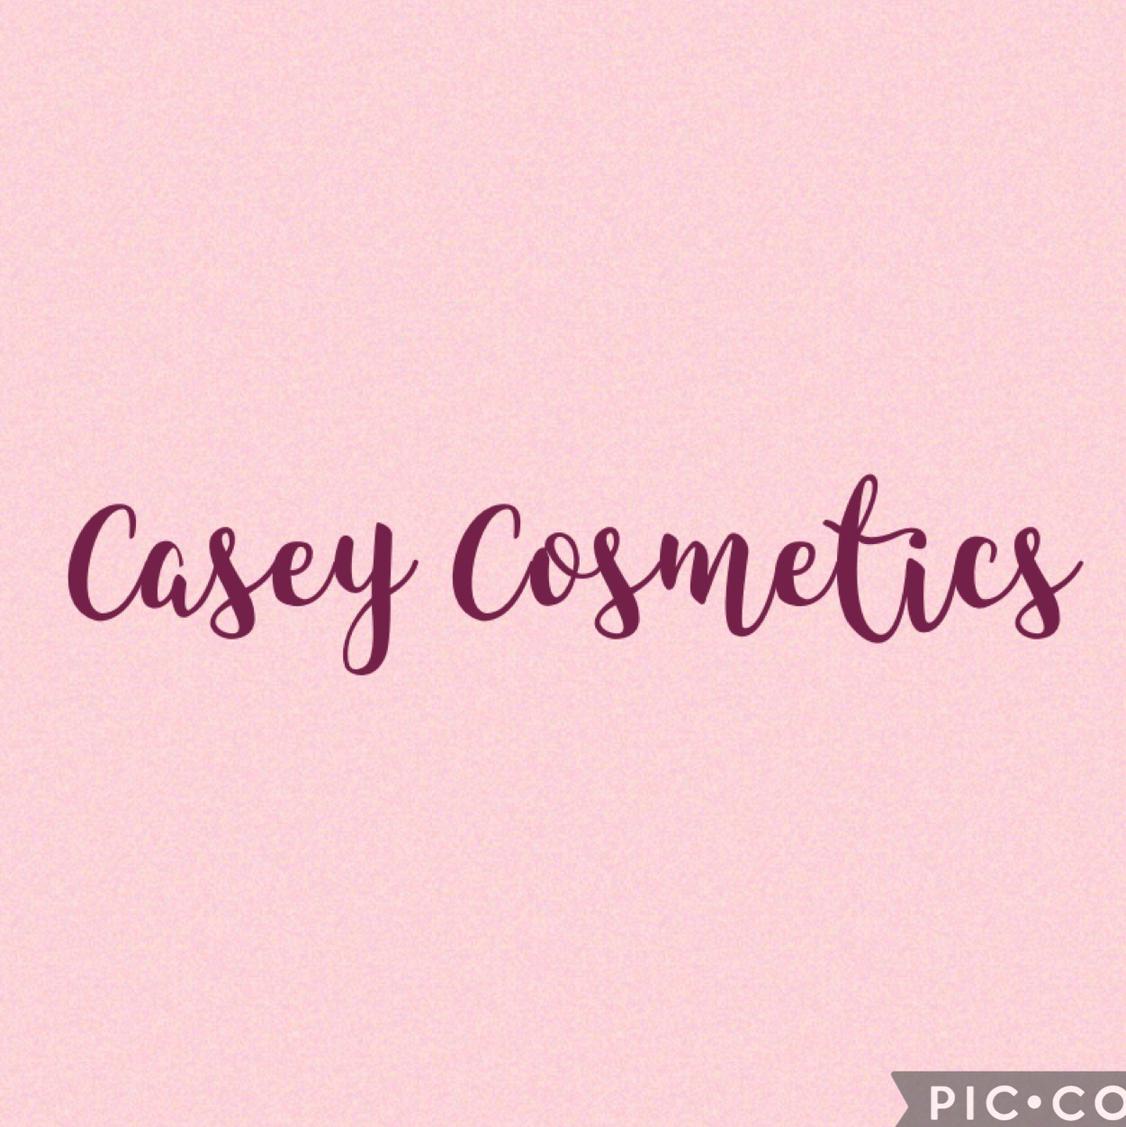 Casey Cosmetics's images